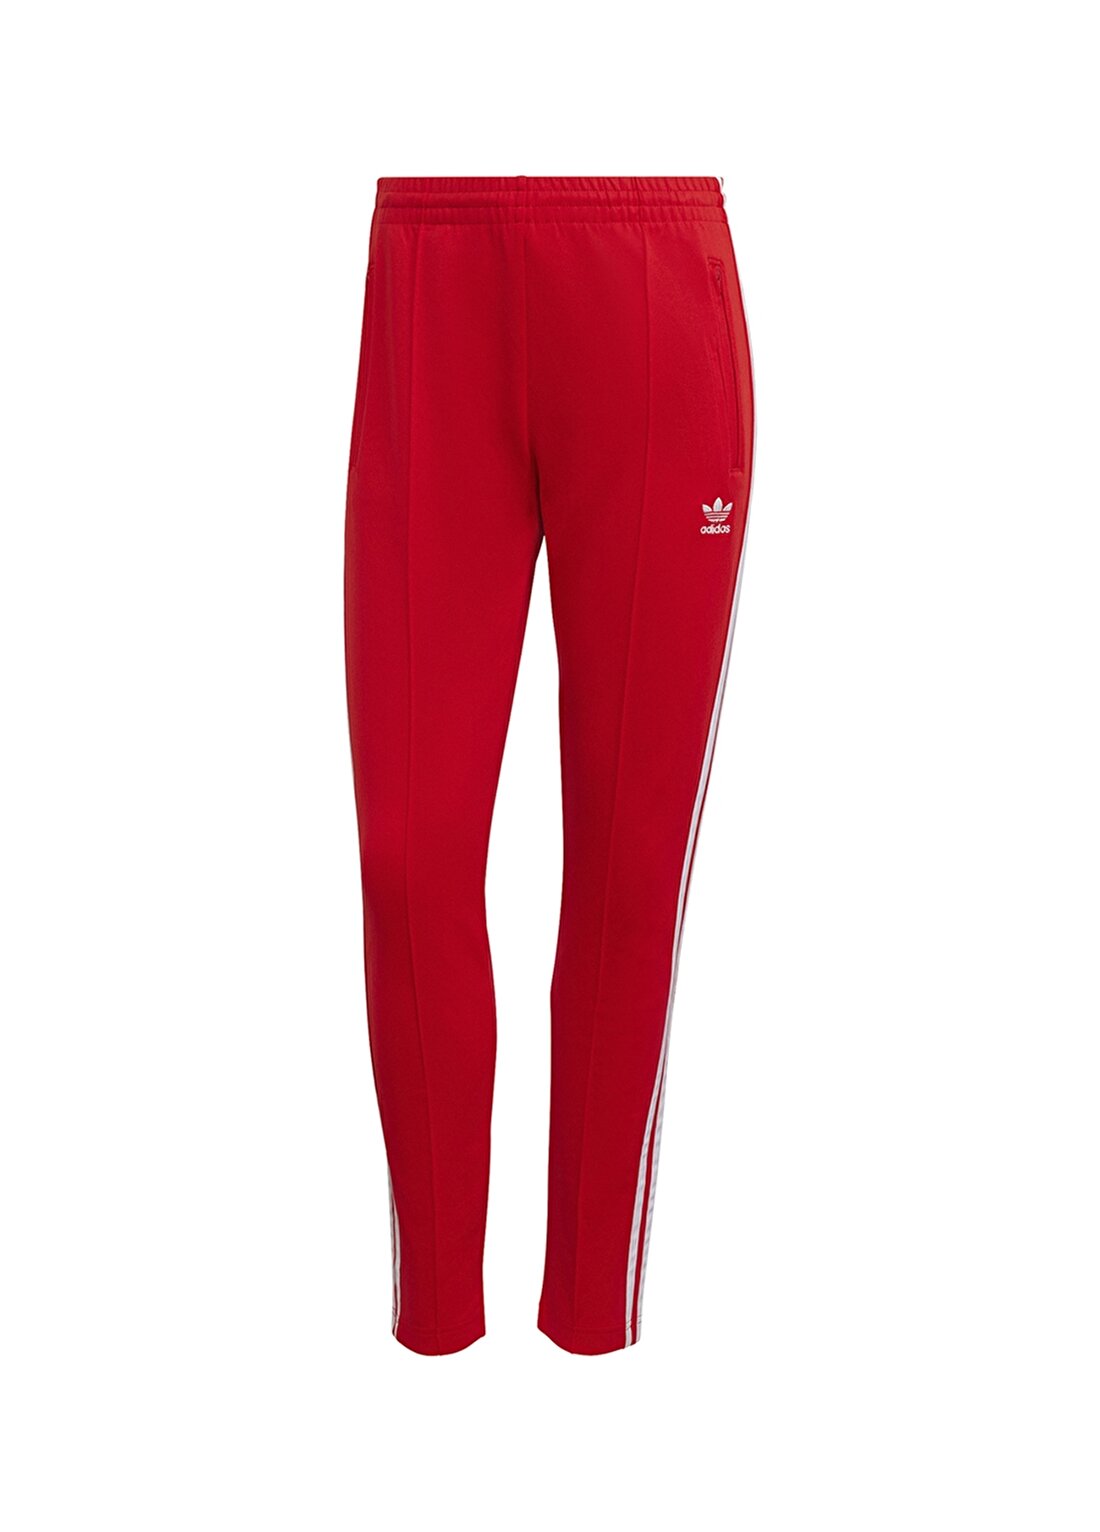 Adidas Hf1992 Sst Pants Pb Normal Bel Düz Kırmızı Kadın Eşofman Altı